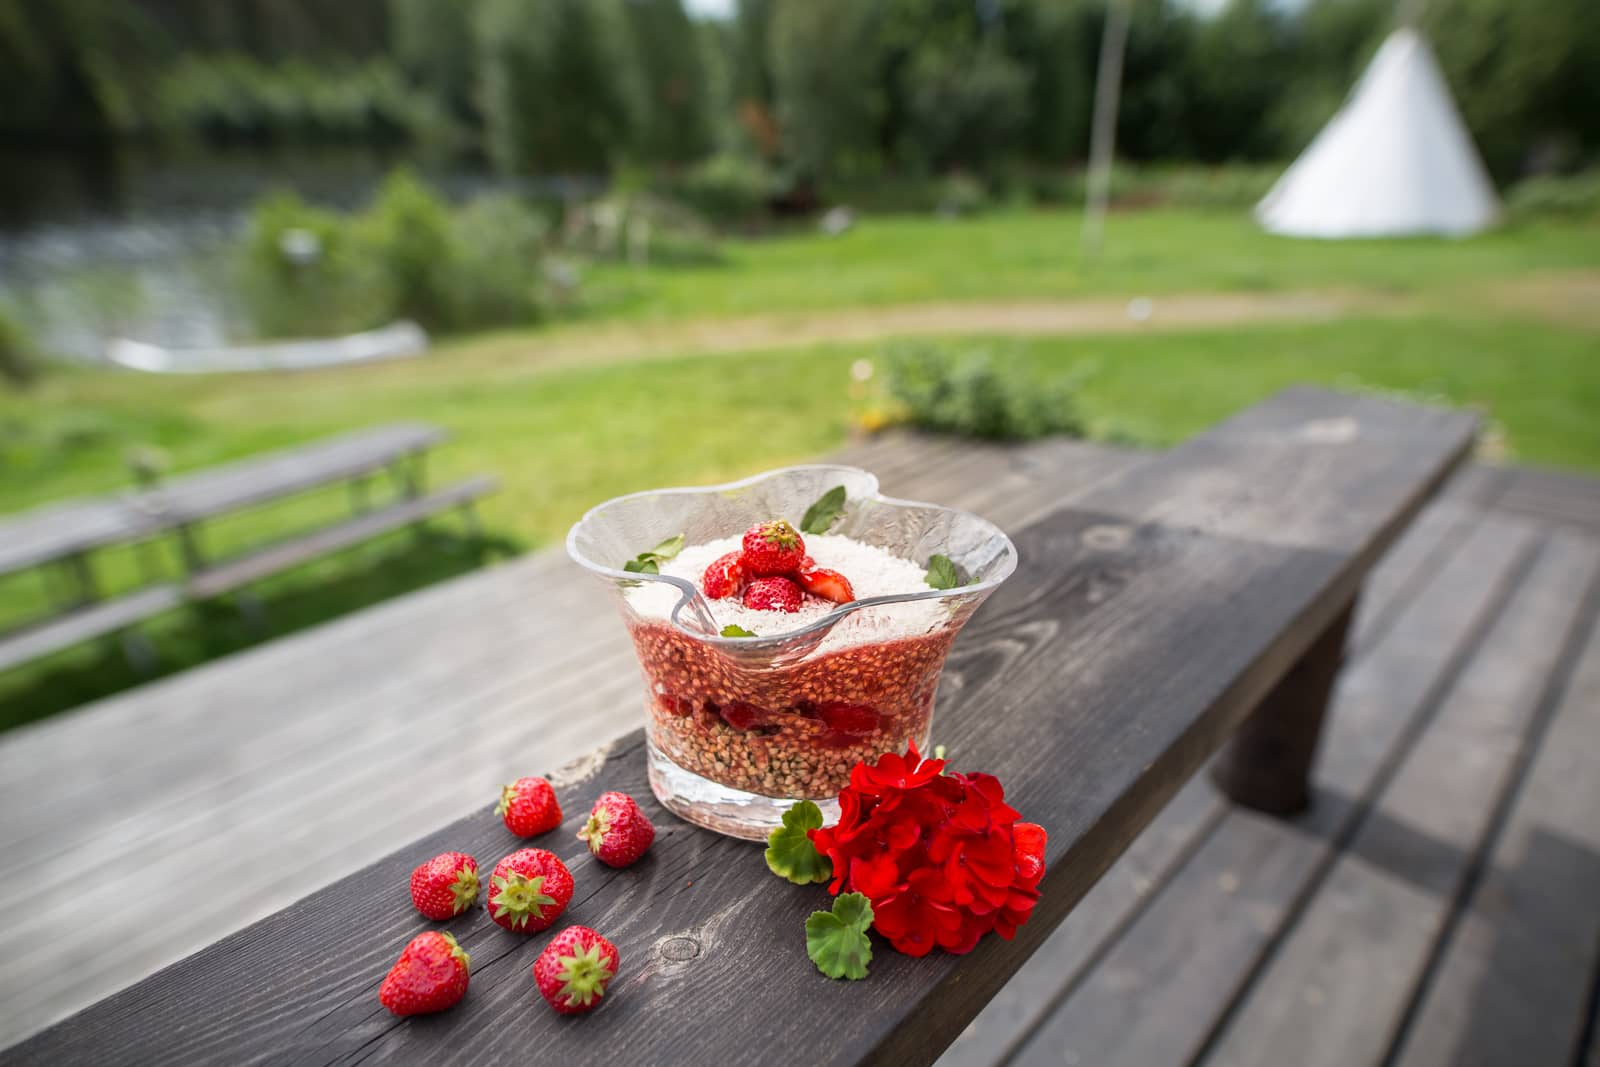 Strawberry dessert with flowers